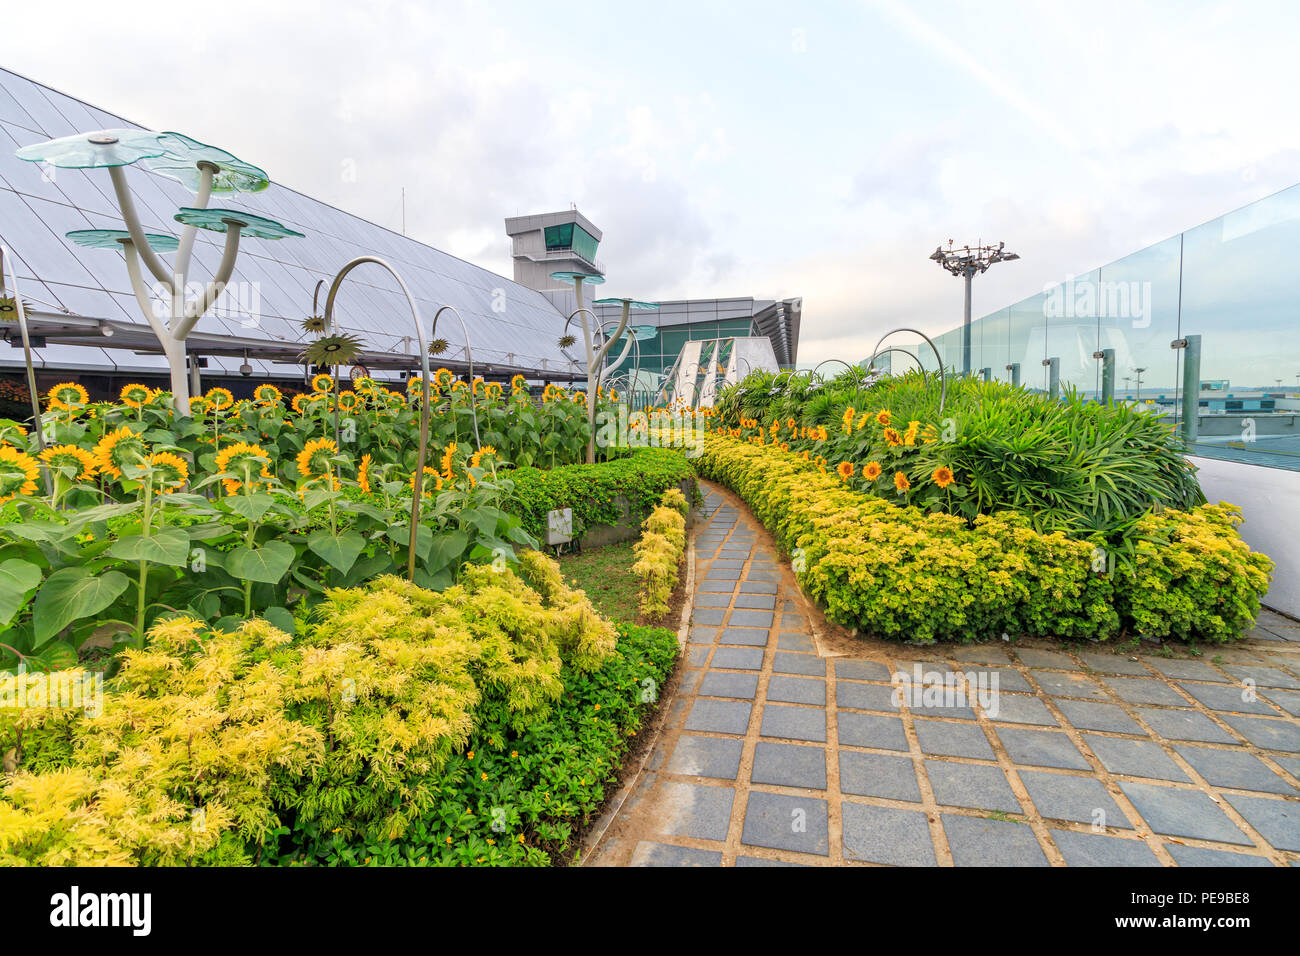 singapore - july 26, 2018: the sunflower garden at singapore changi